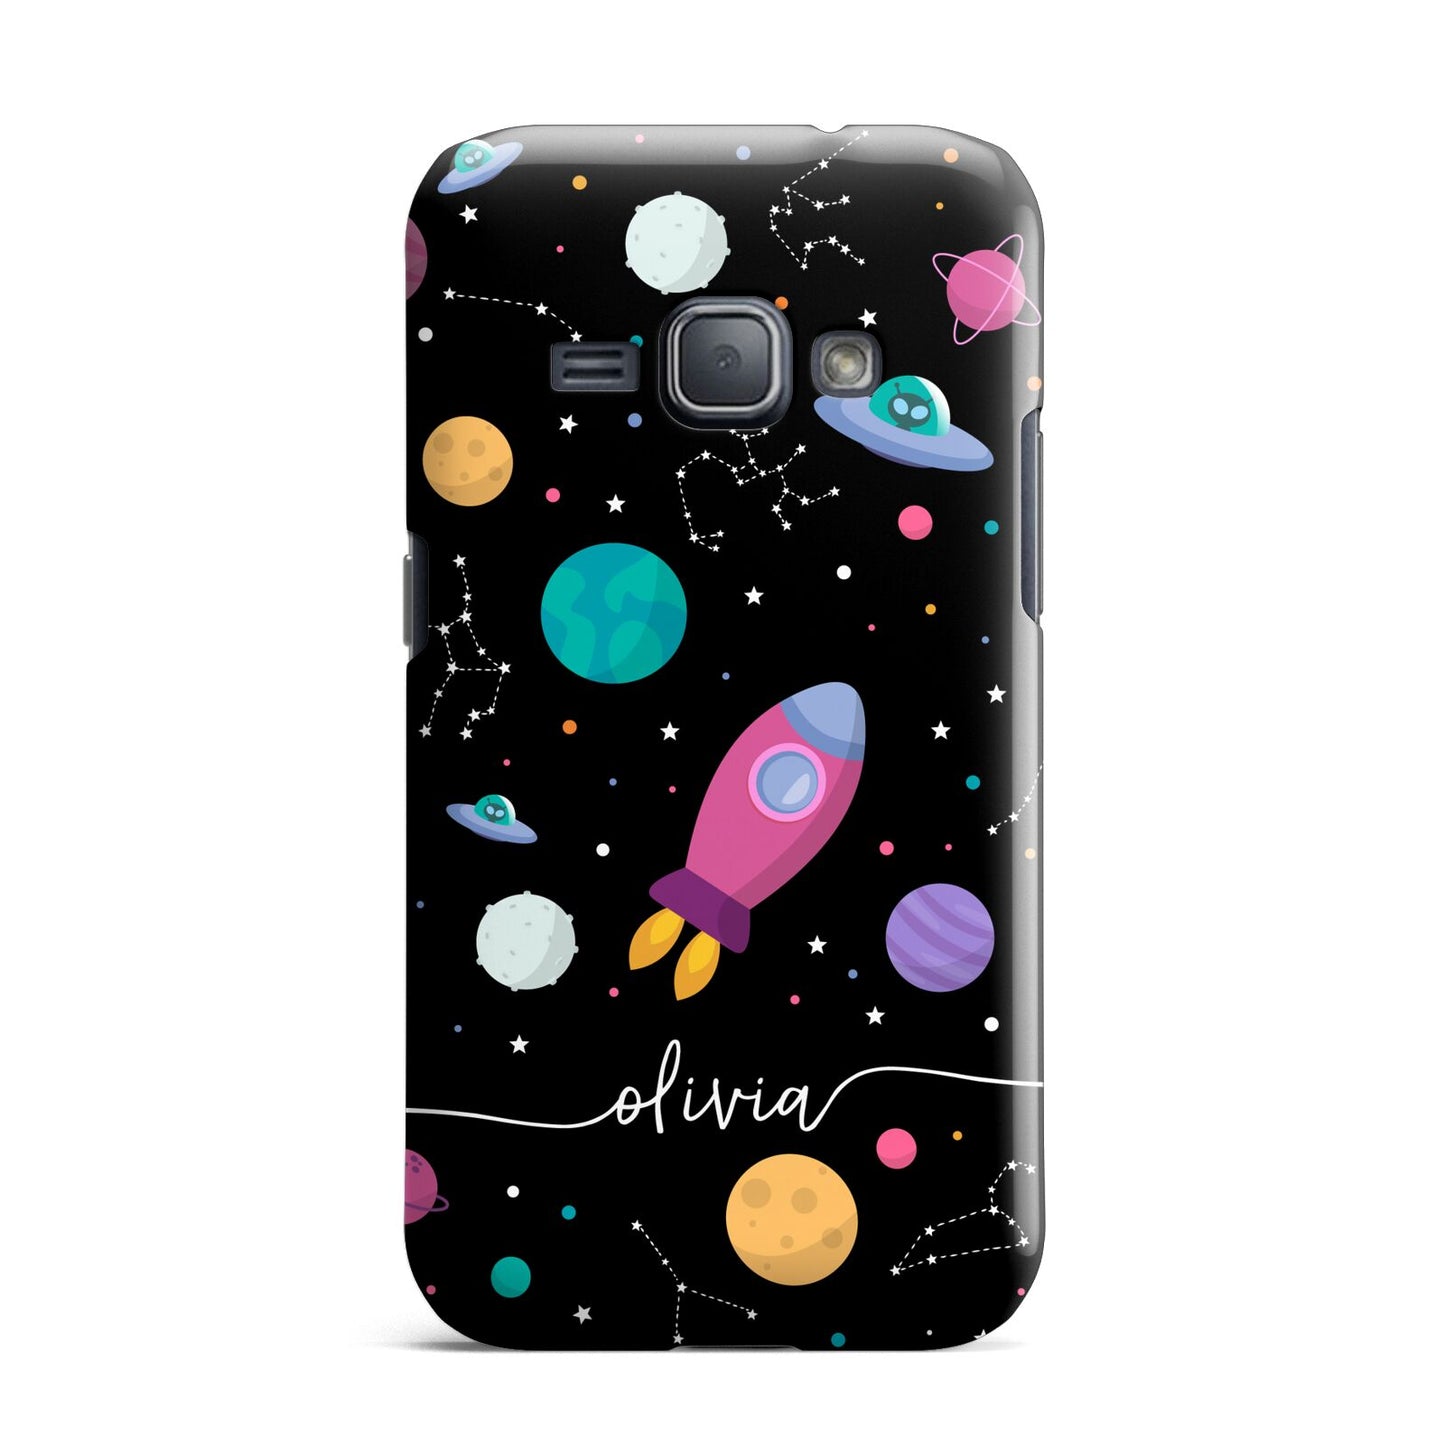 Galaxy Artwork with Name Samsung Galaxy J1 2016 Case